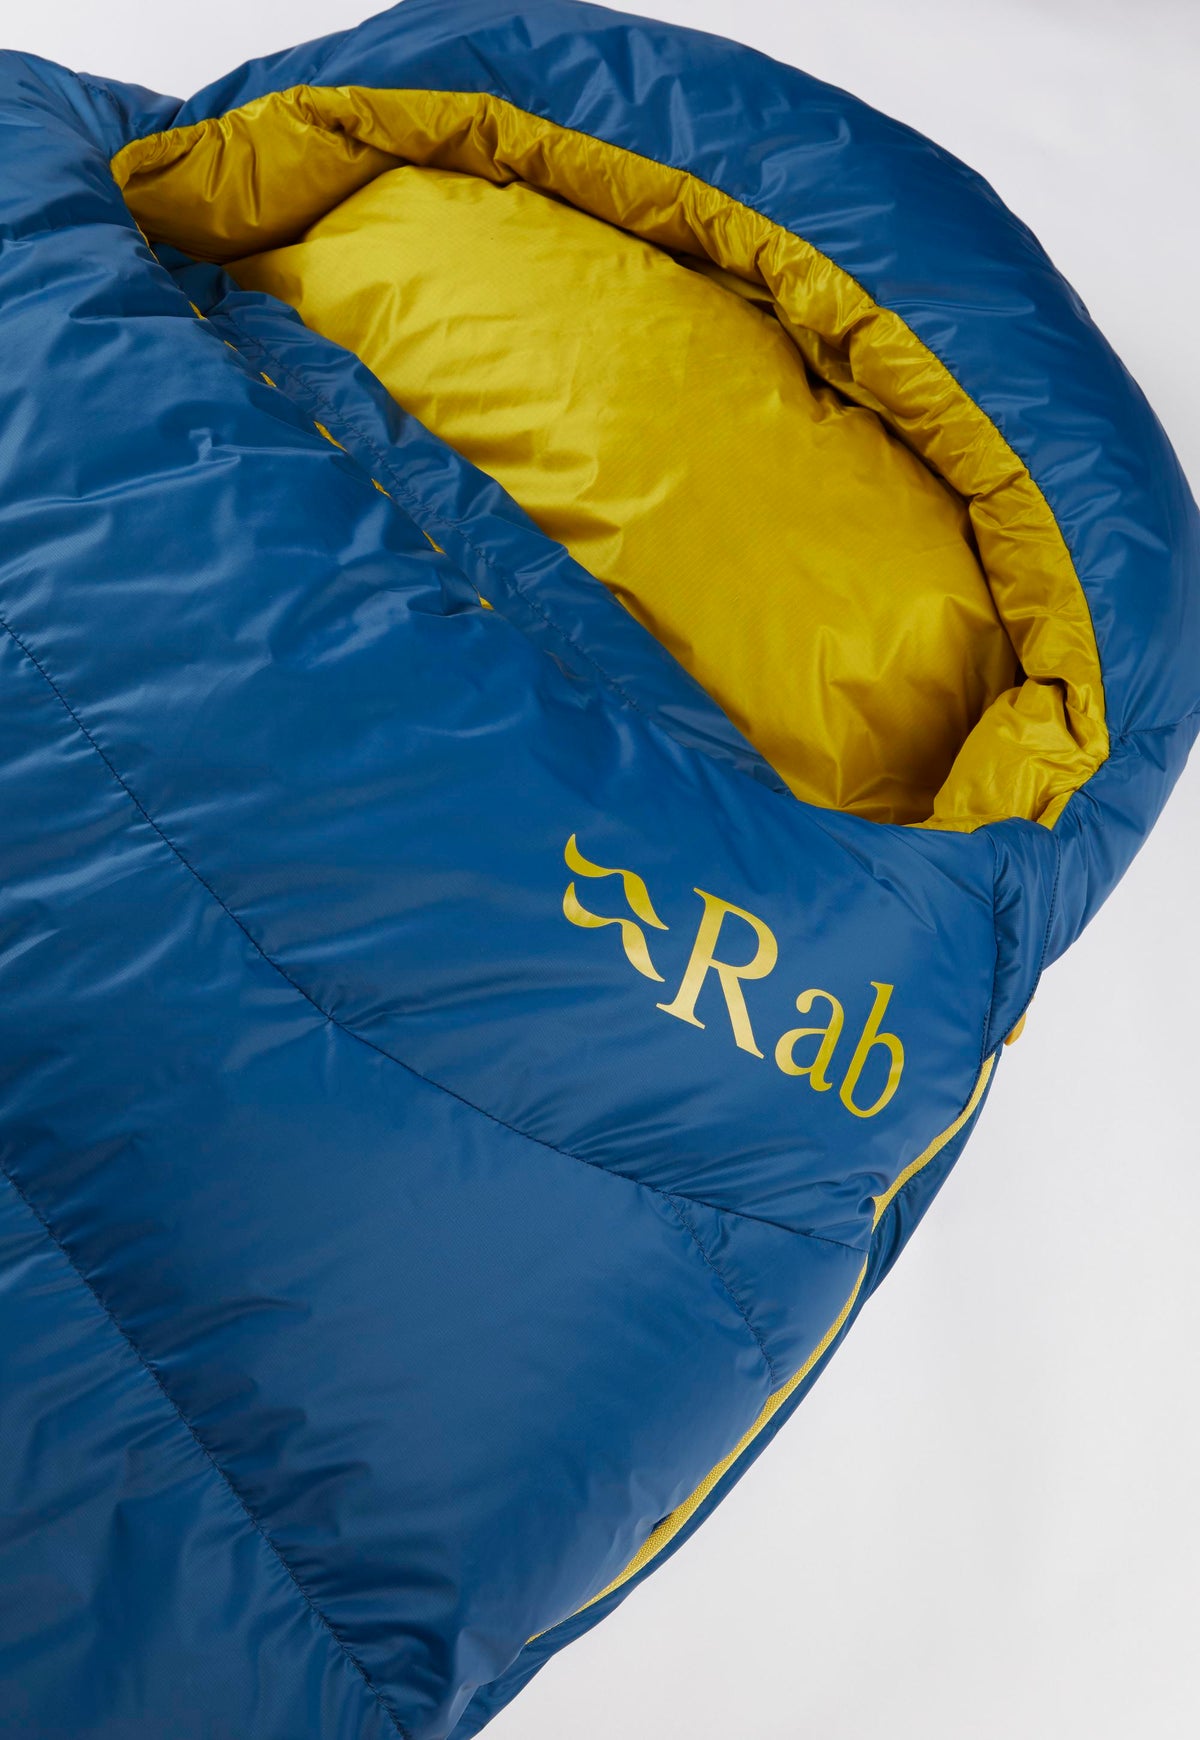 Rab Ascent Pro 600 Sleeping Bag